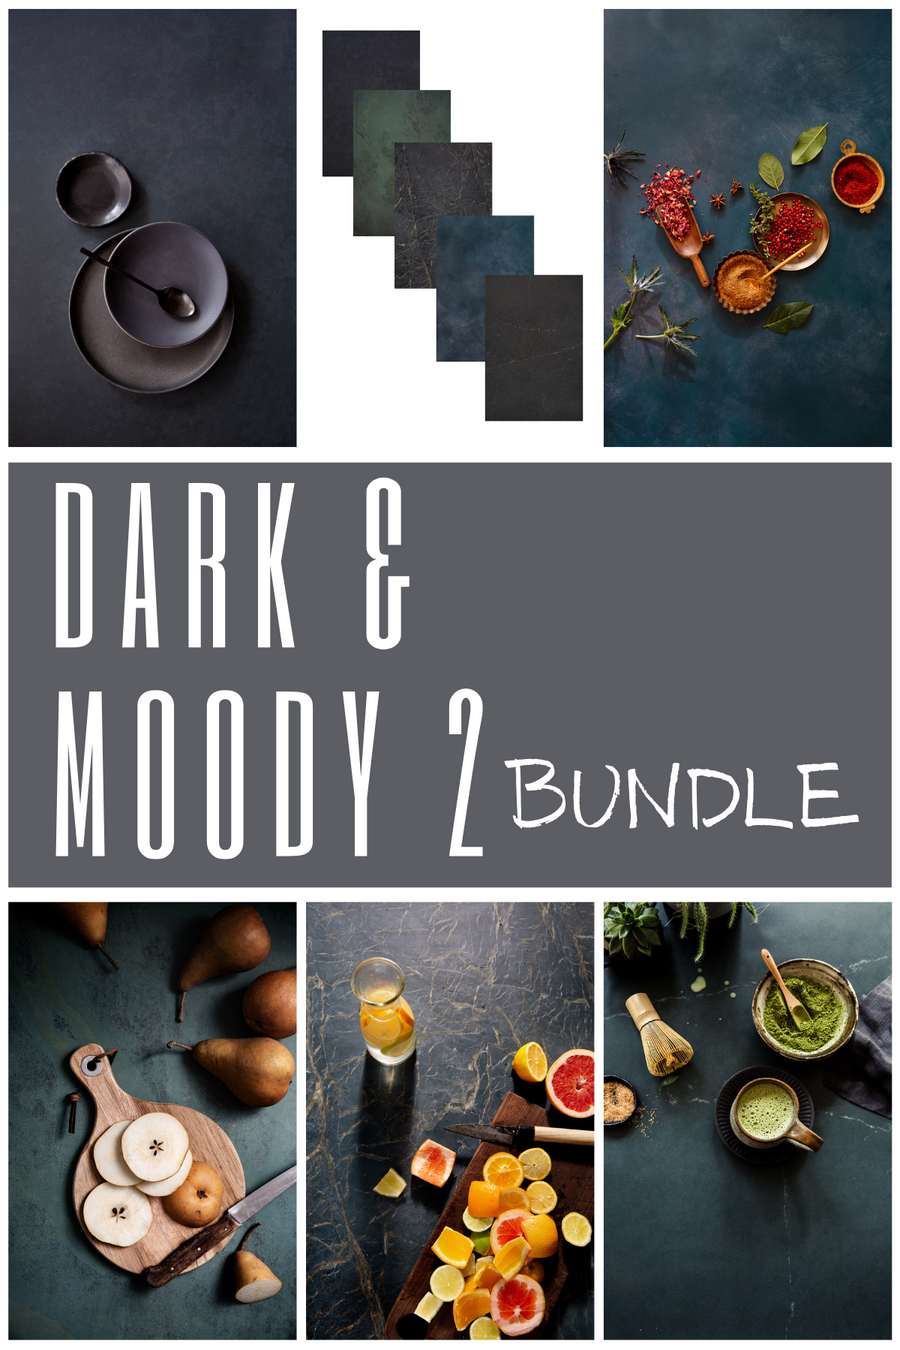 Dark & Moody #2 Bundle